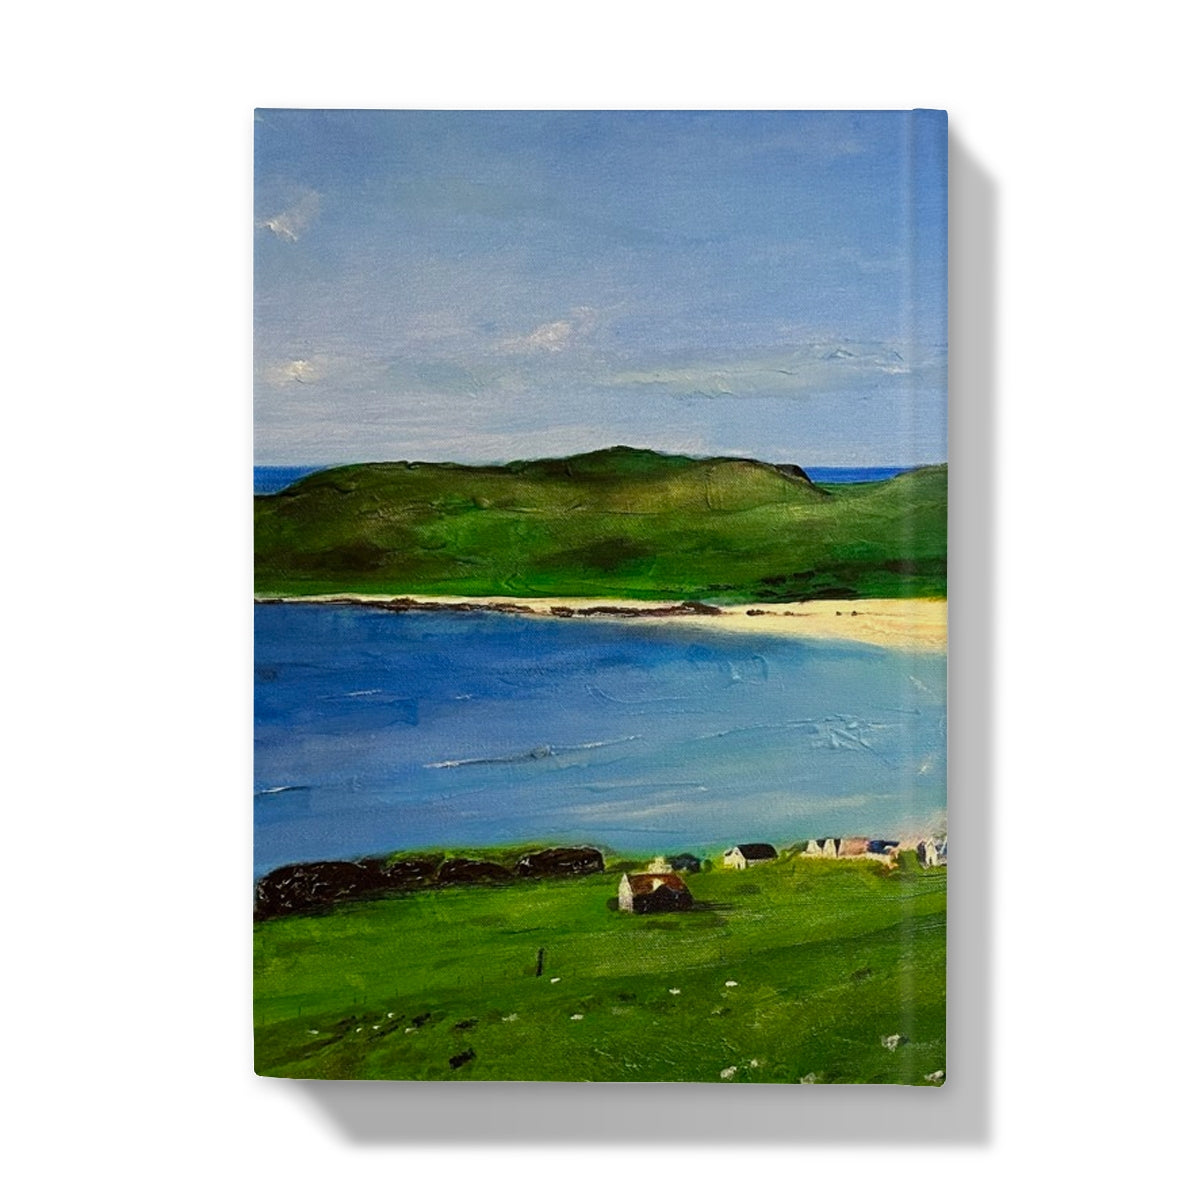 Balephuil Beach Tiree Art Gifts Hardback Journal-Journals & Notebooks-Hebridean Islands Art Gallery-Paintings, Prints, Homeware, Art Gifts From Scotland By Scottish Artist Kevin Hunter